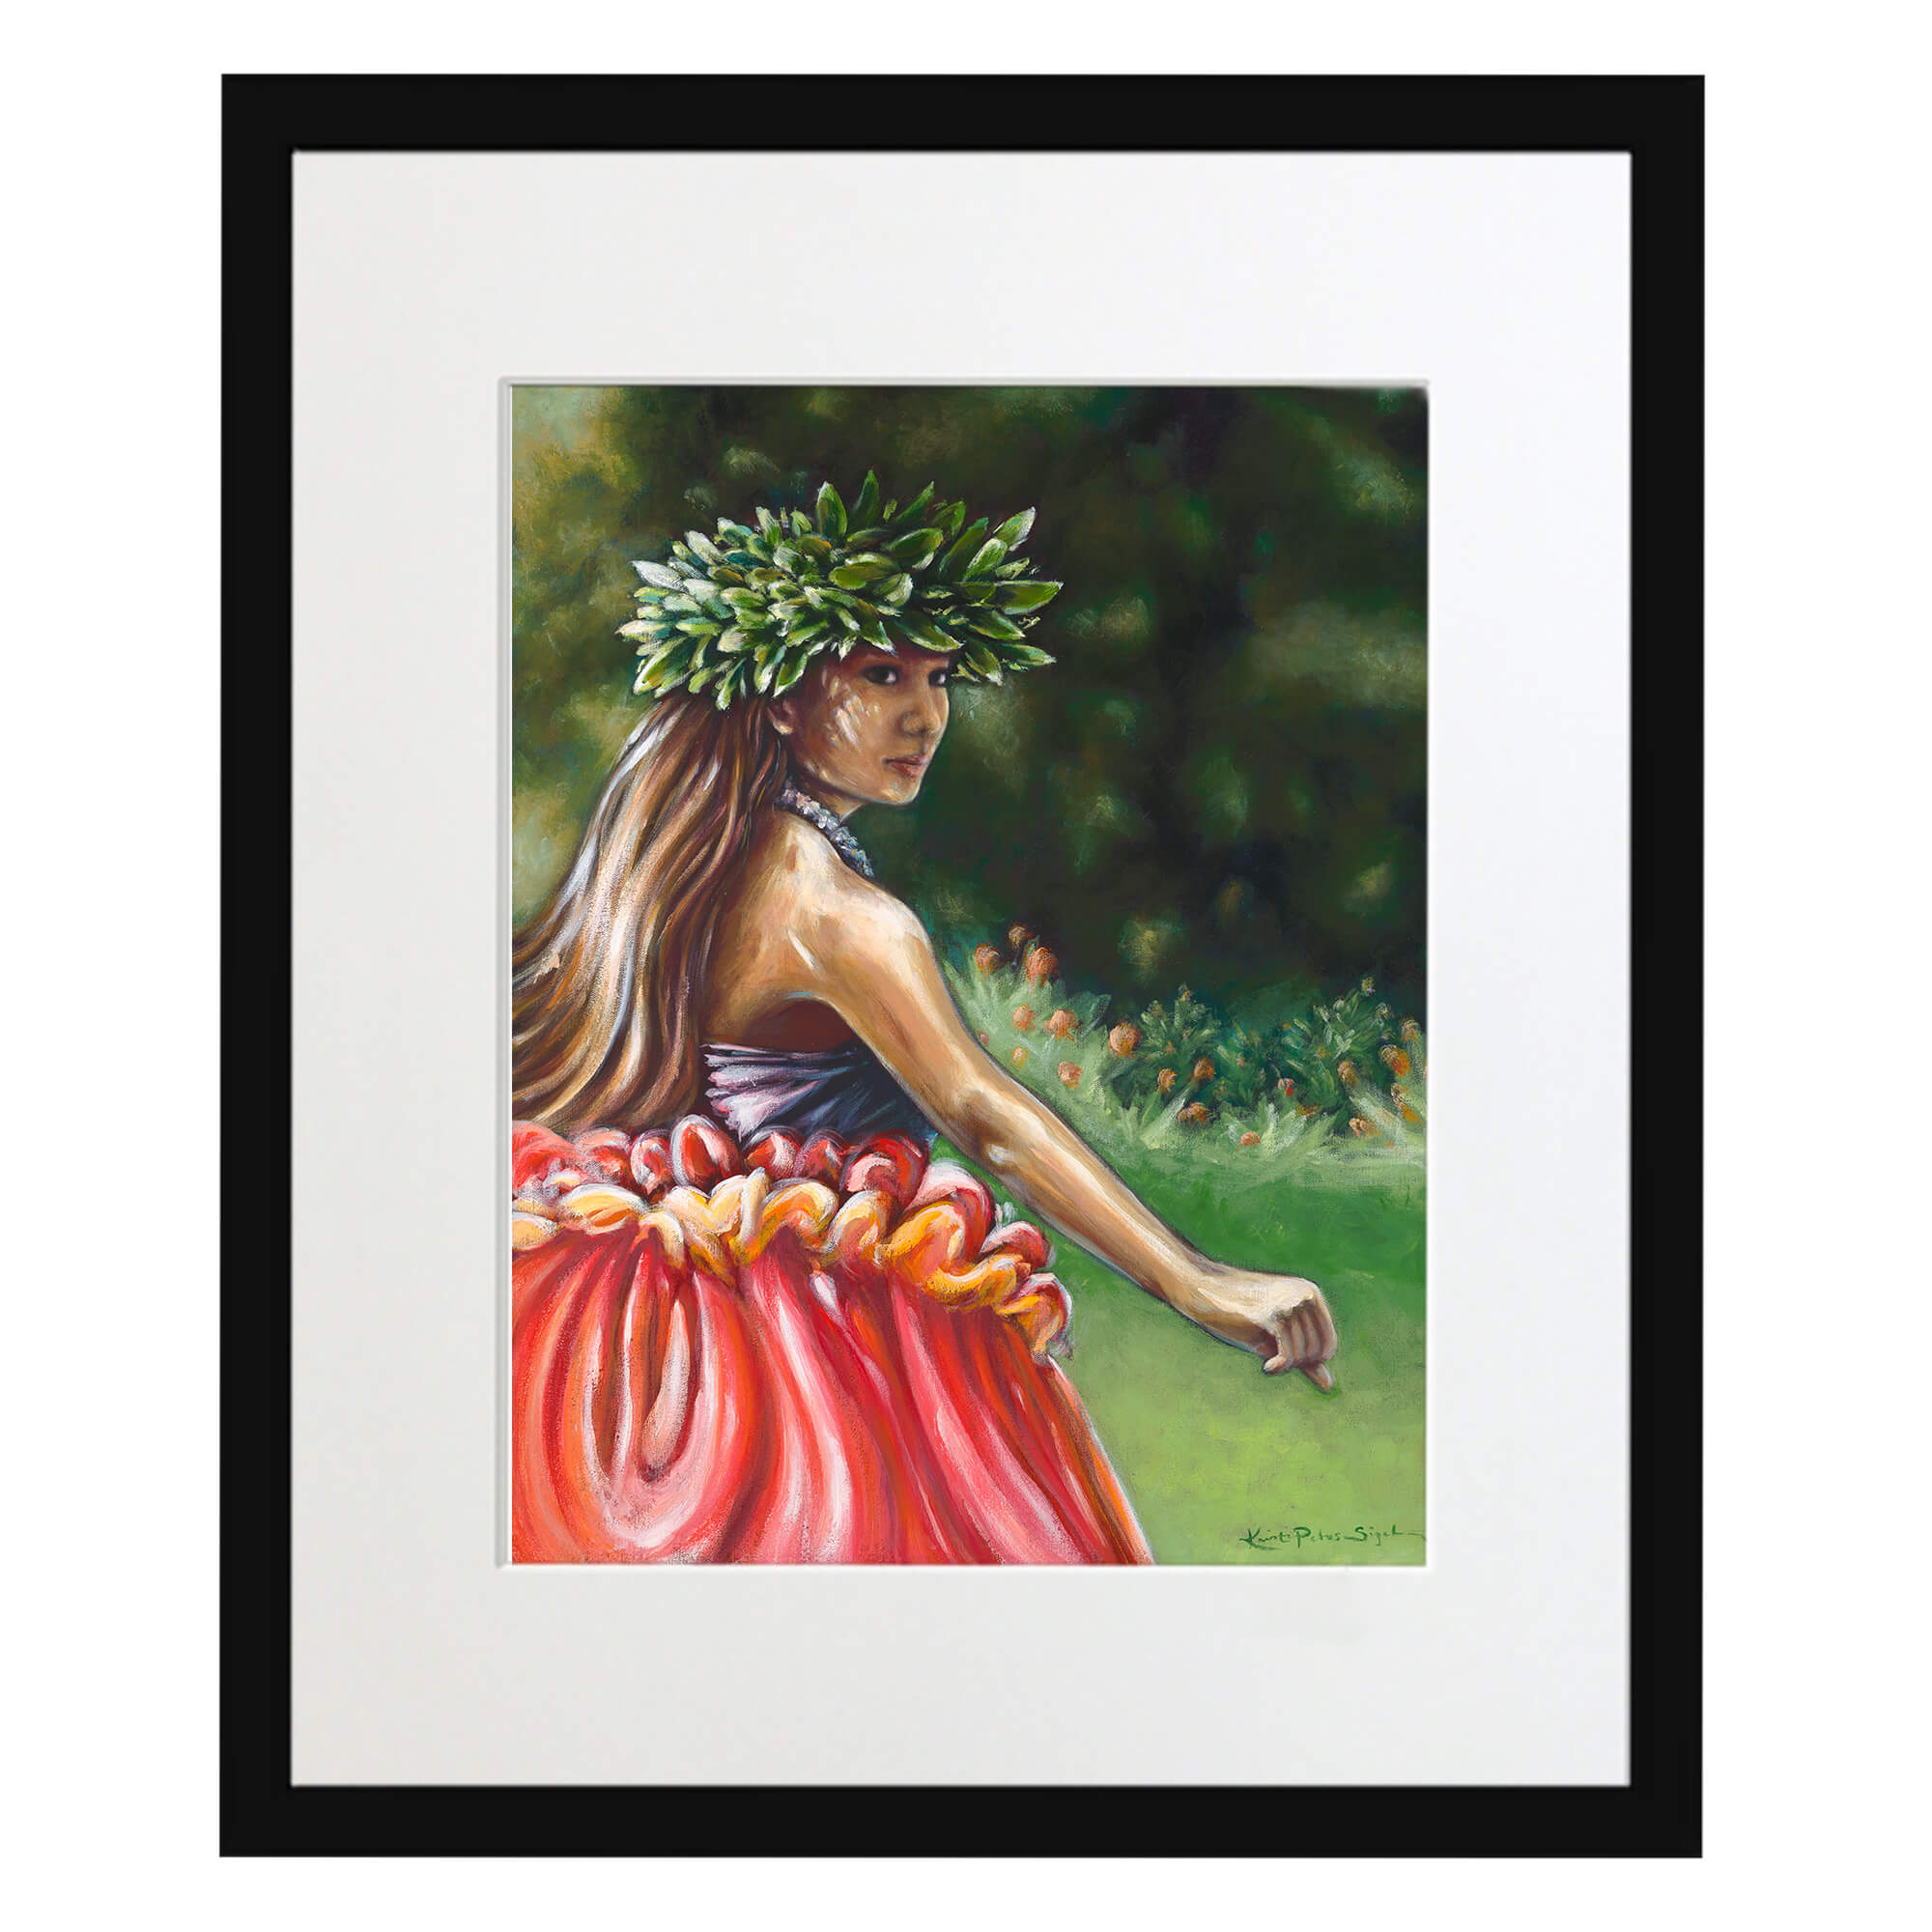 Matted art print with black frame showcasing a woman wearing a dress  by hawaii artist Kristi Petosa